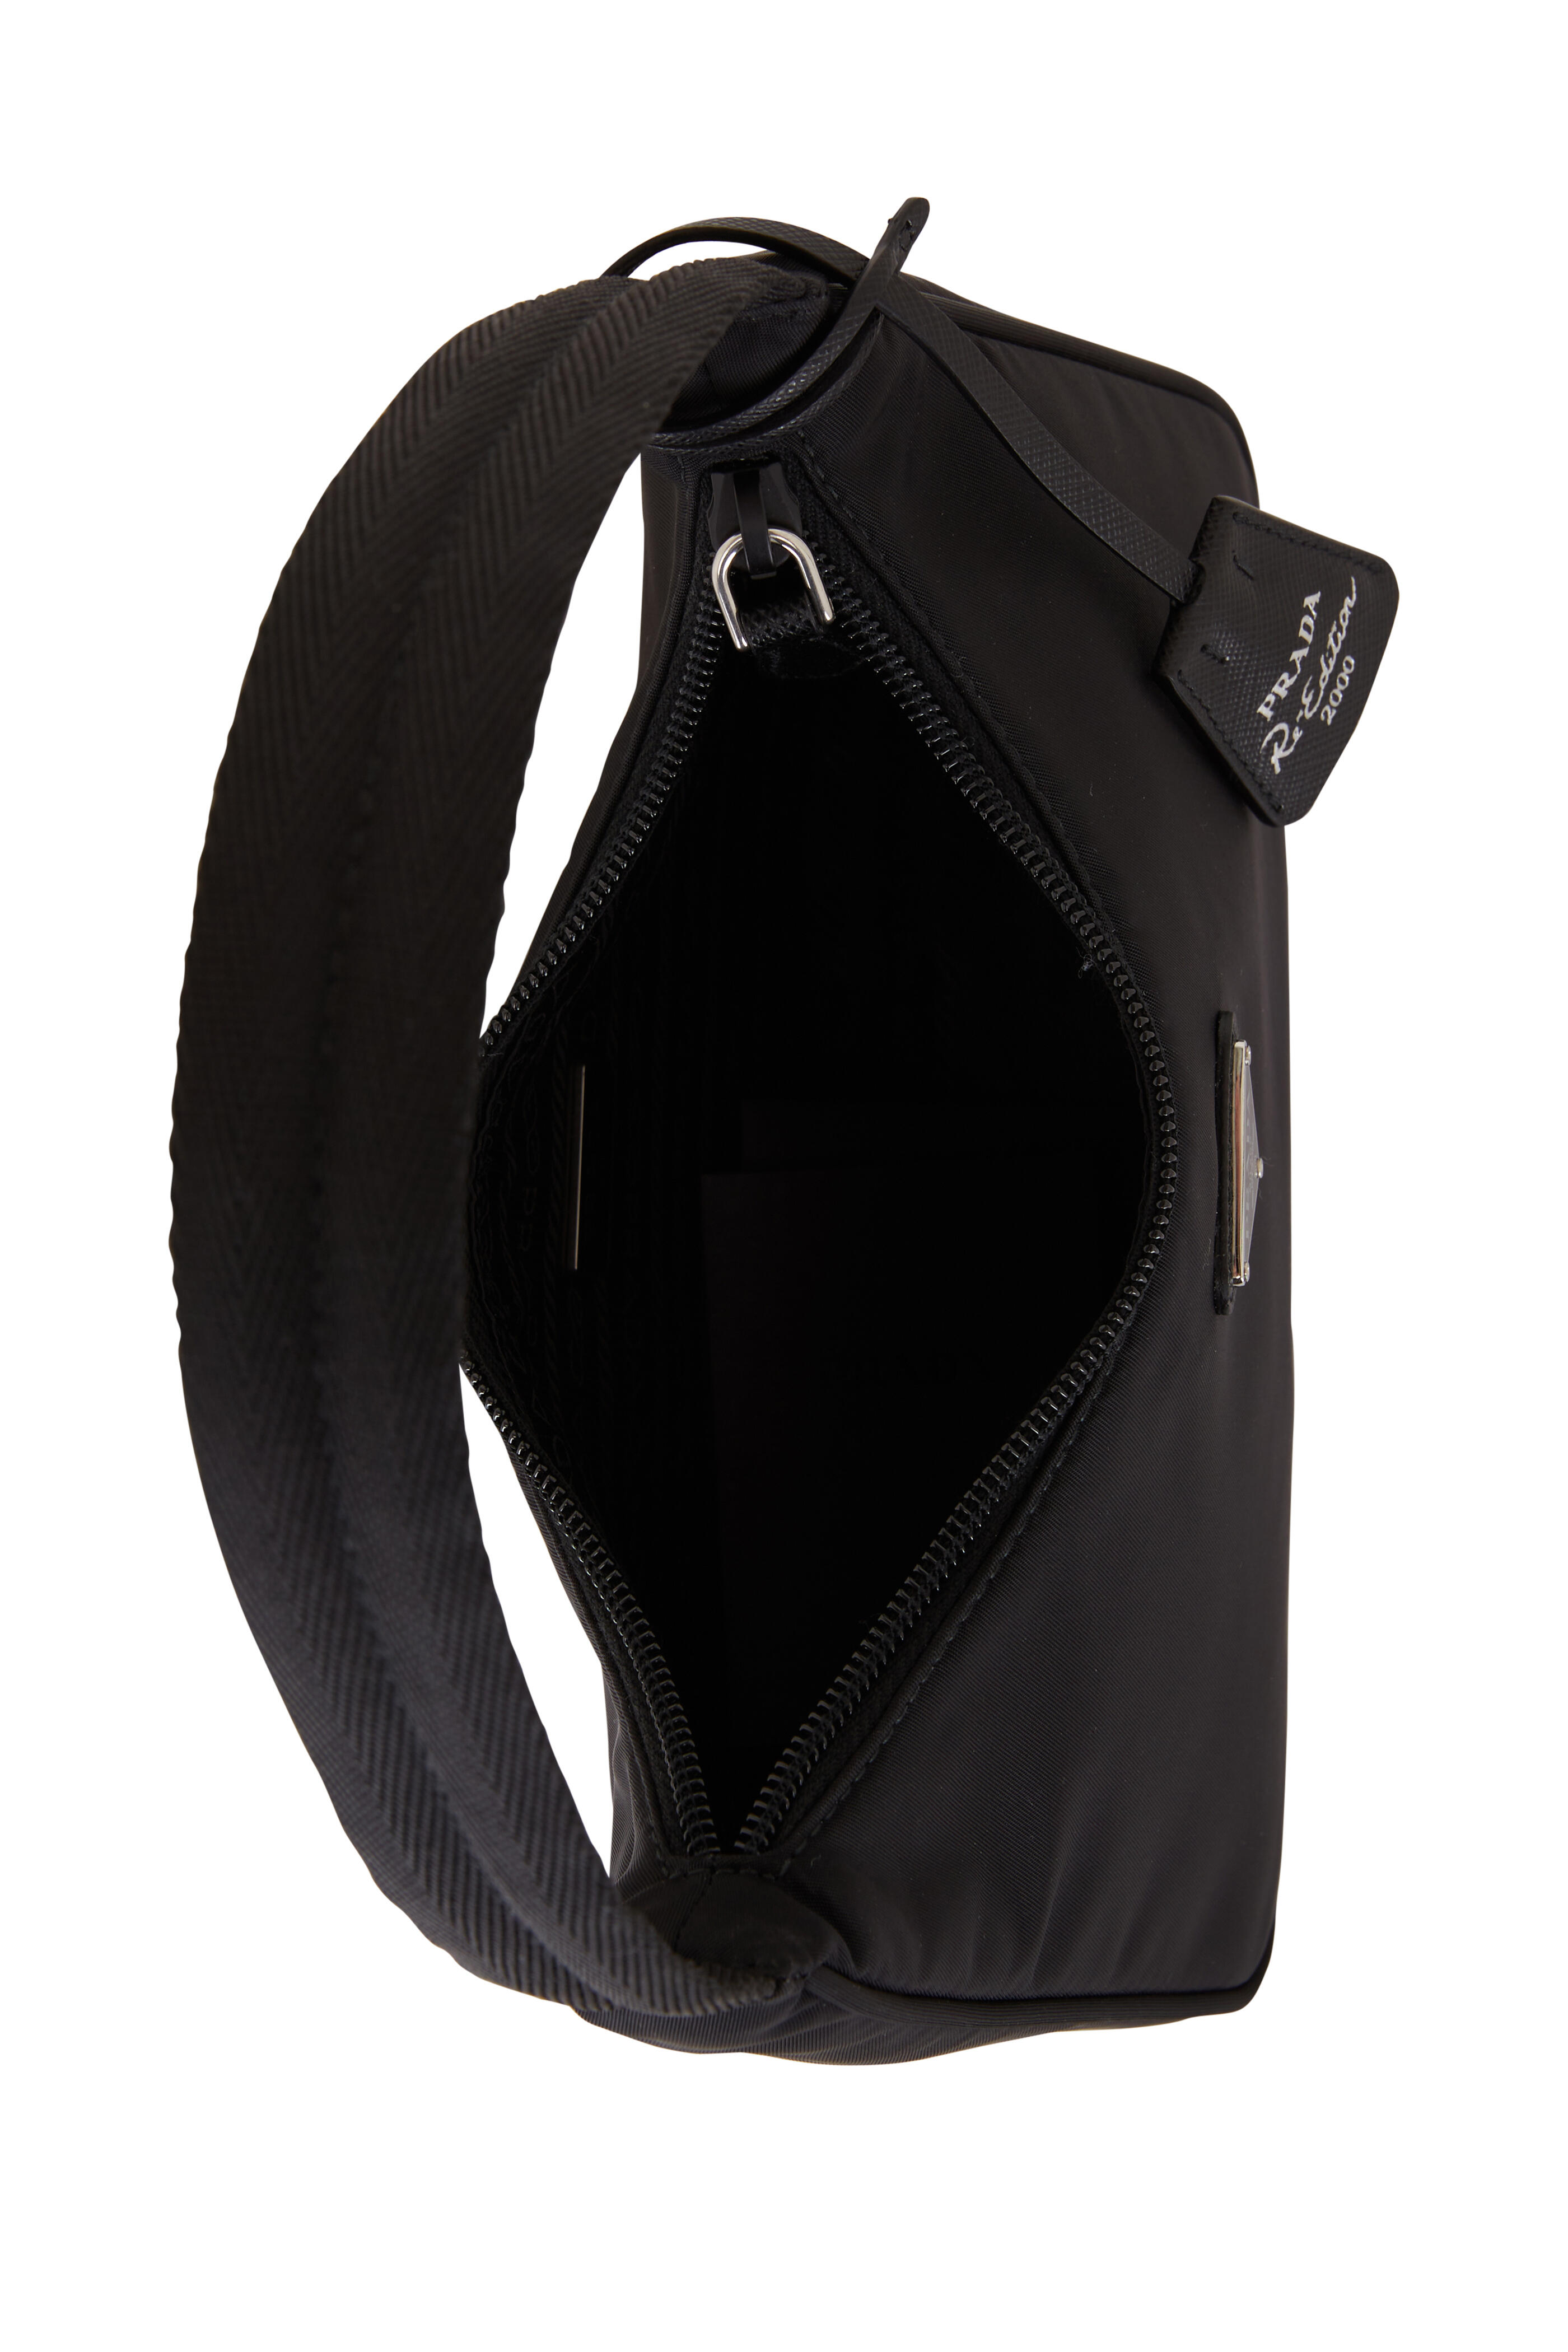 Prada Women's Black Re-Nylon Triangle Shoulder Bag | by Mitchell Stores